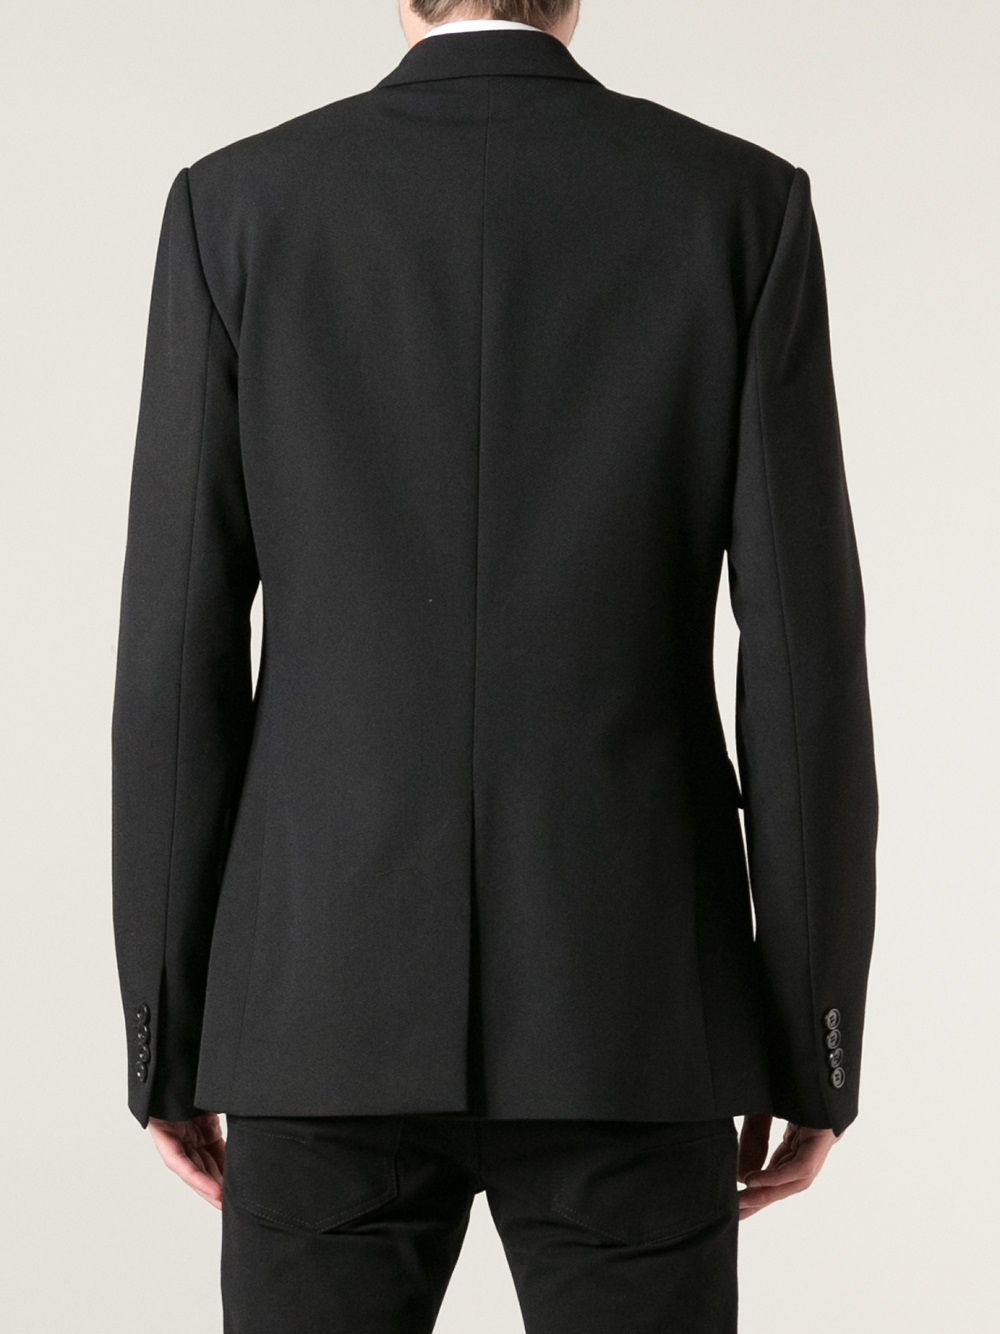 Lyst - Dior homme Zipped Blazer in Black for Men